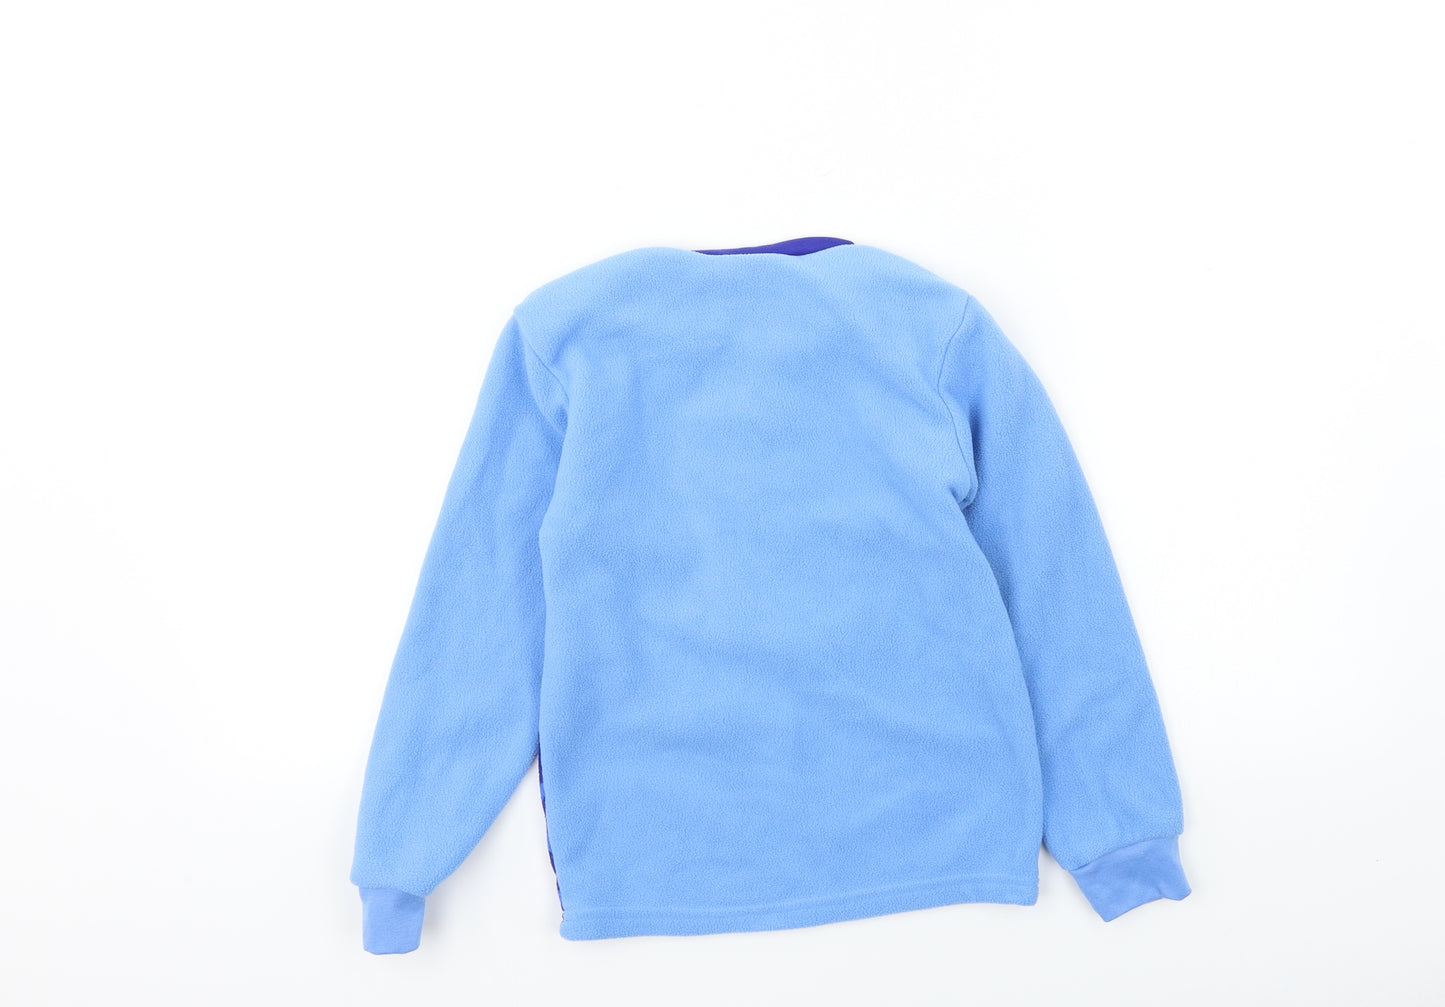 dreamwoorks Boys Blue Colourblock   Pyjama Top Size 8 Years  - Penguins